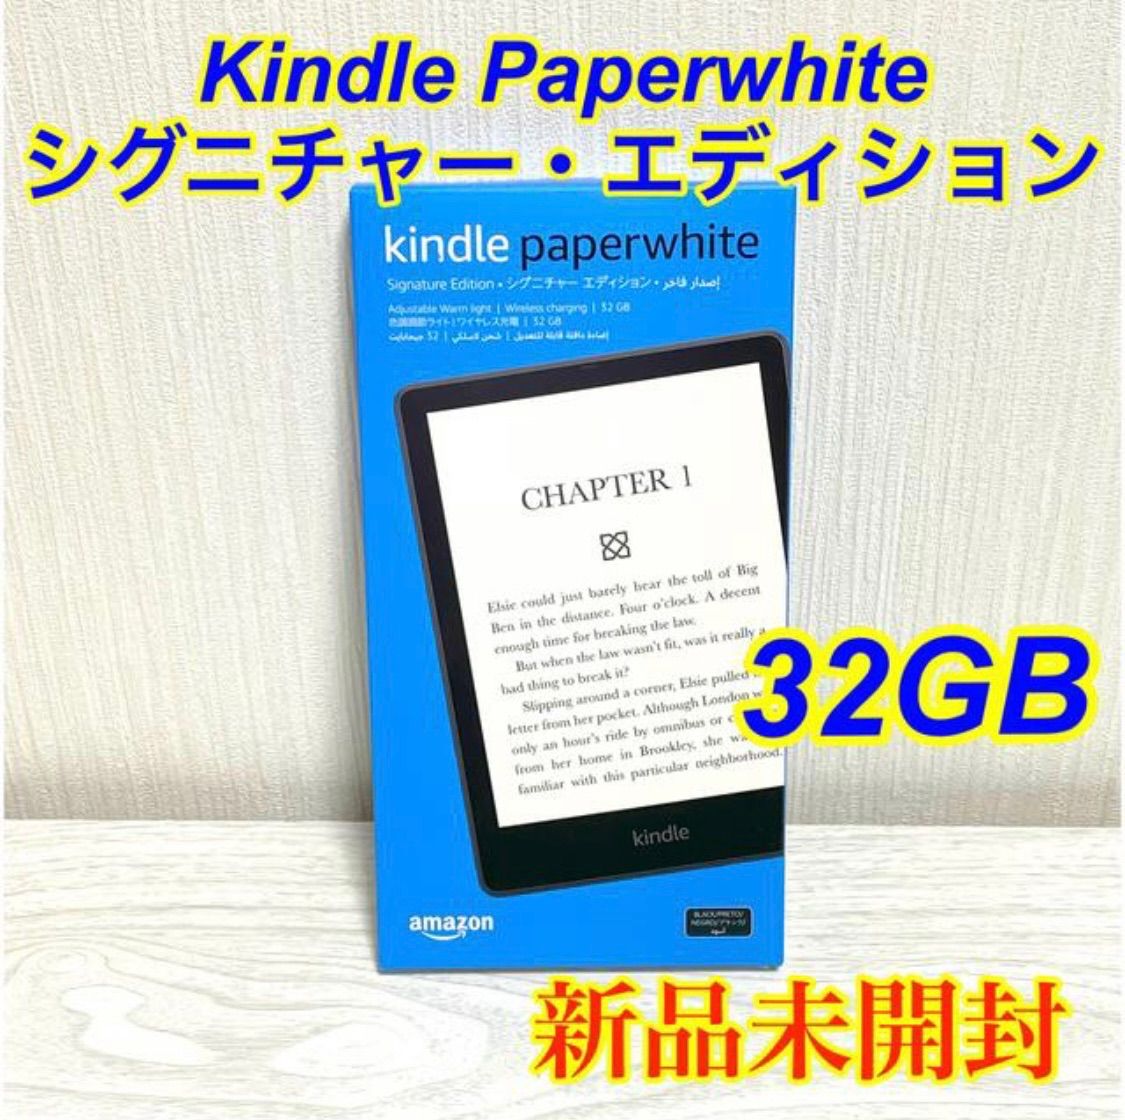 kindle paperwhite signature edition 32GB